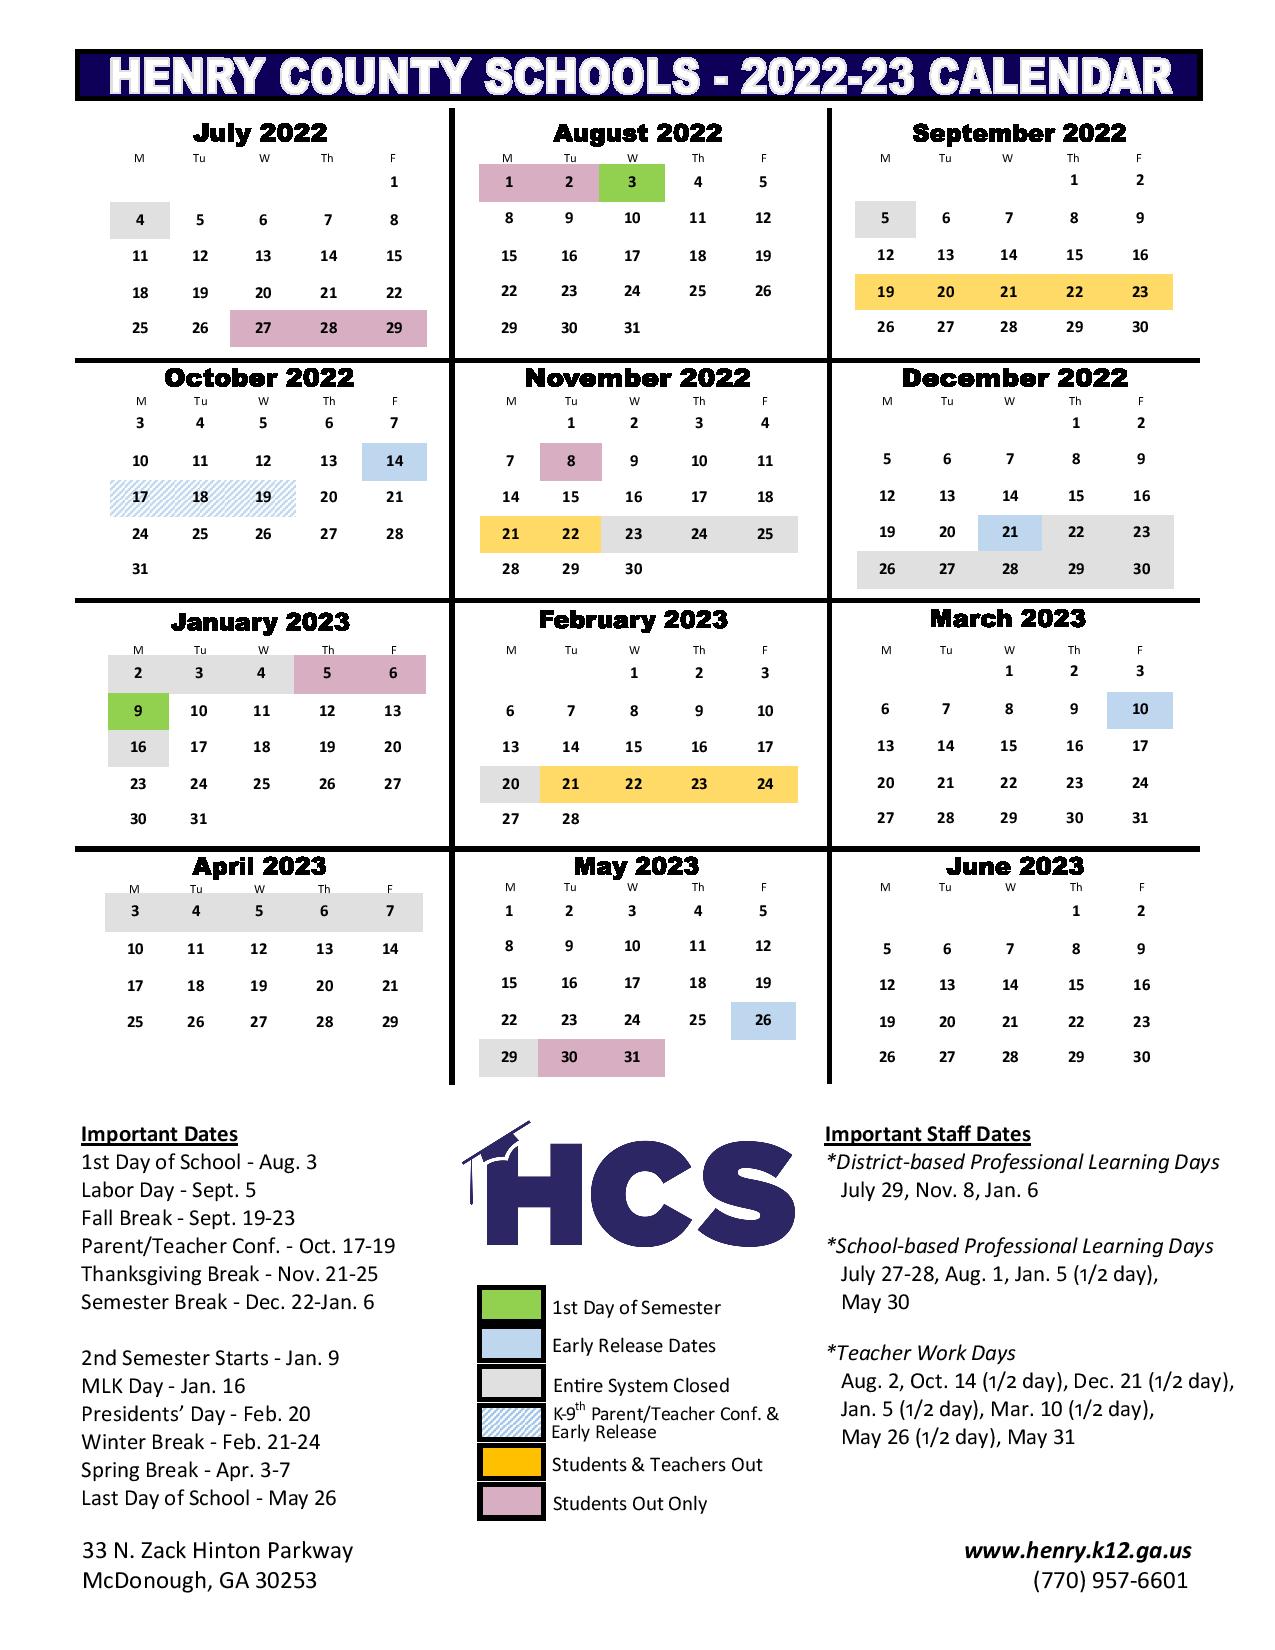 Bedford County School Calendar 2024-2025 - abbye johnette